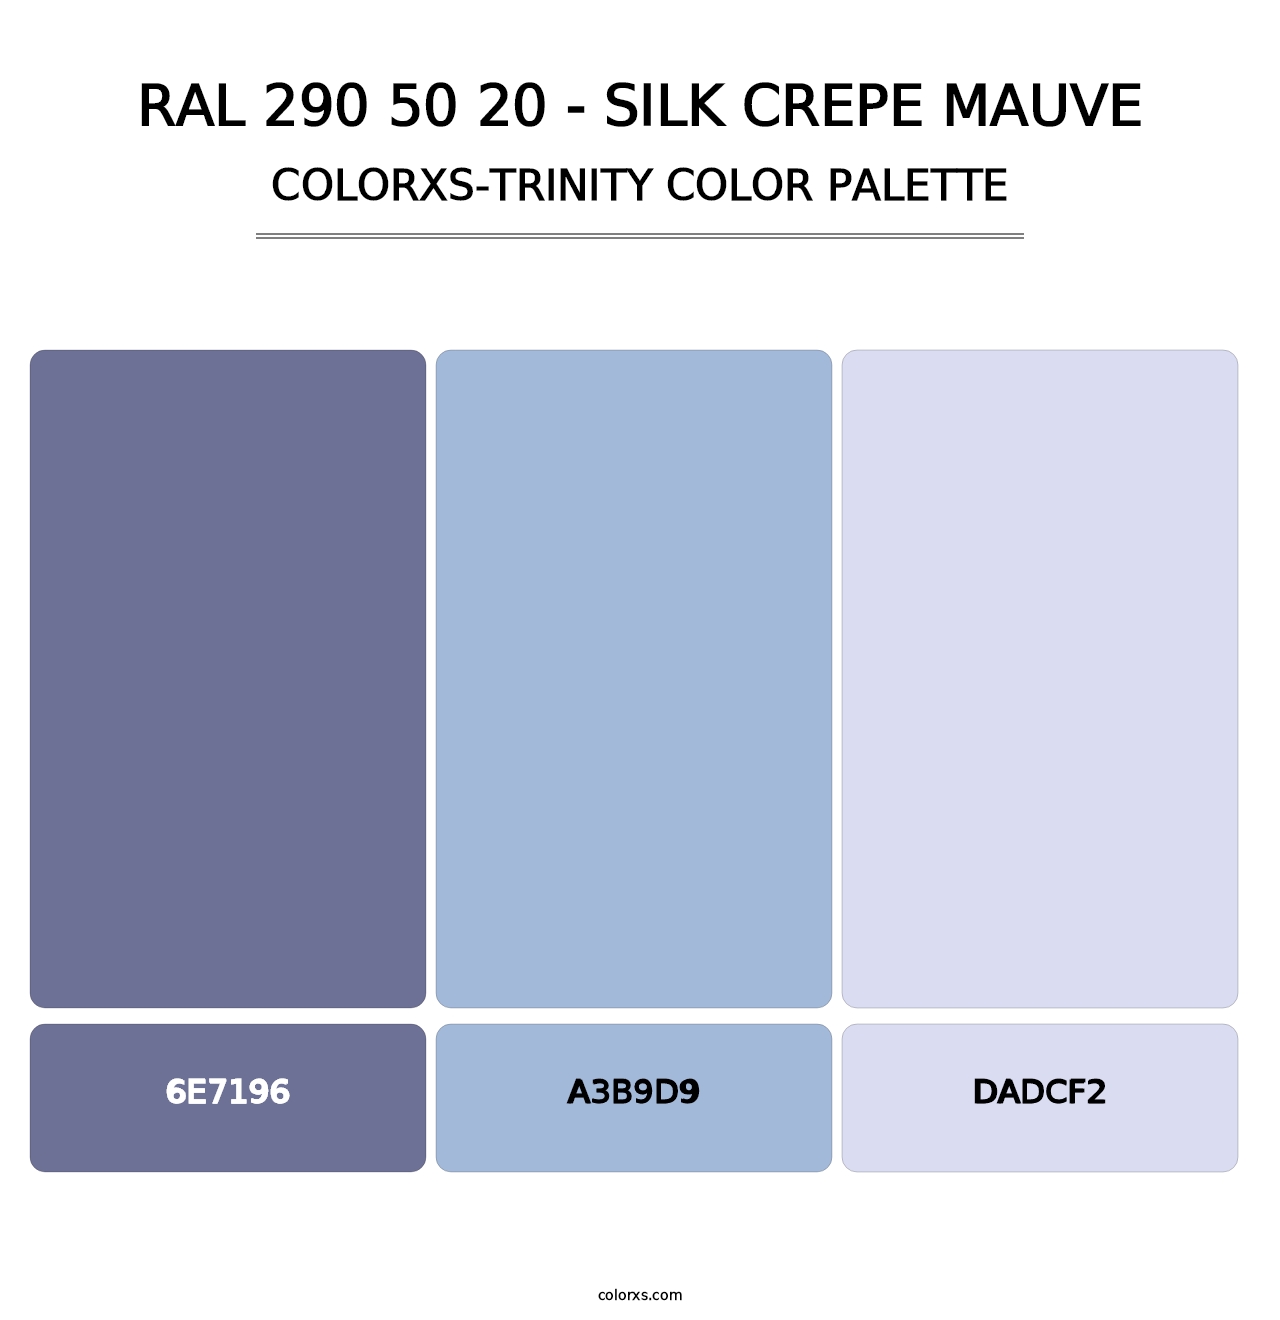 RAL 290 50 20 - Silk Crepe Mauve - Colorxs Trinity Palette